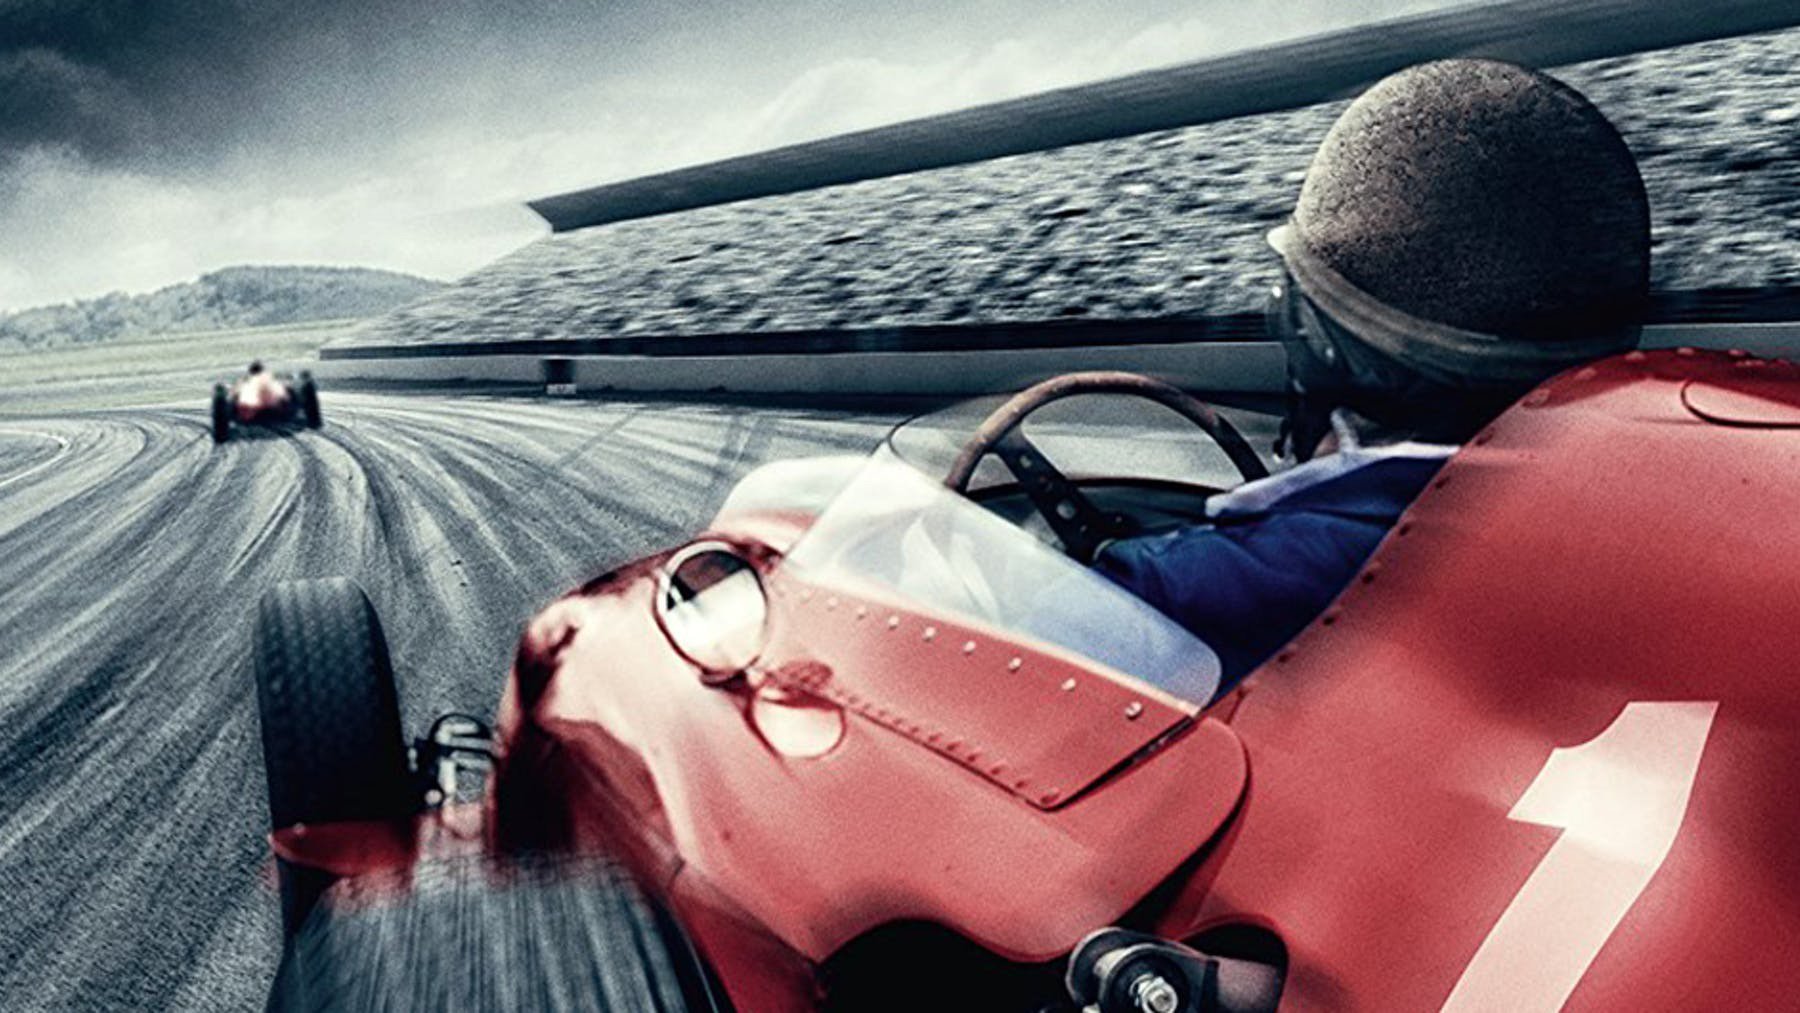 Ferrari: Race to immortality